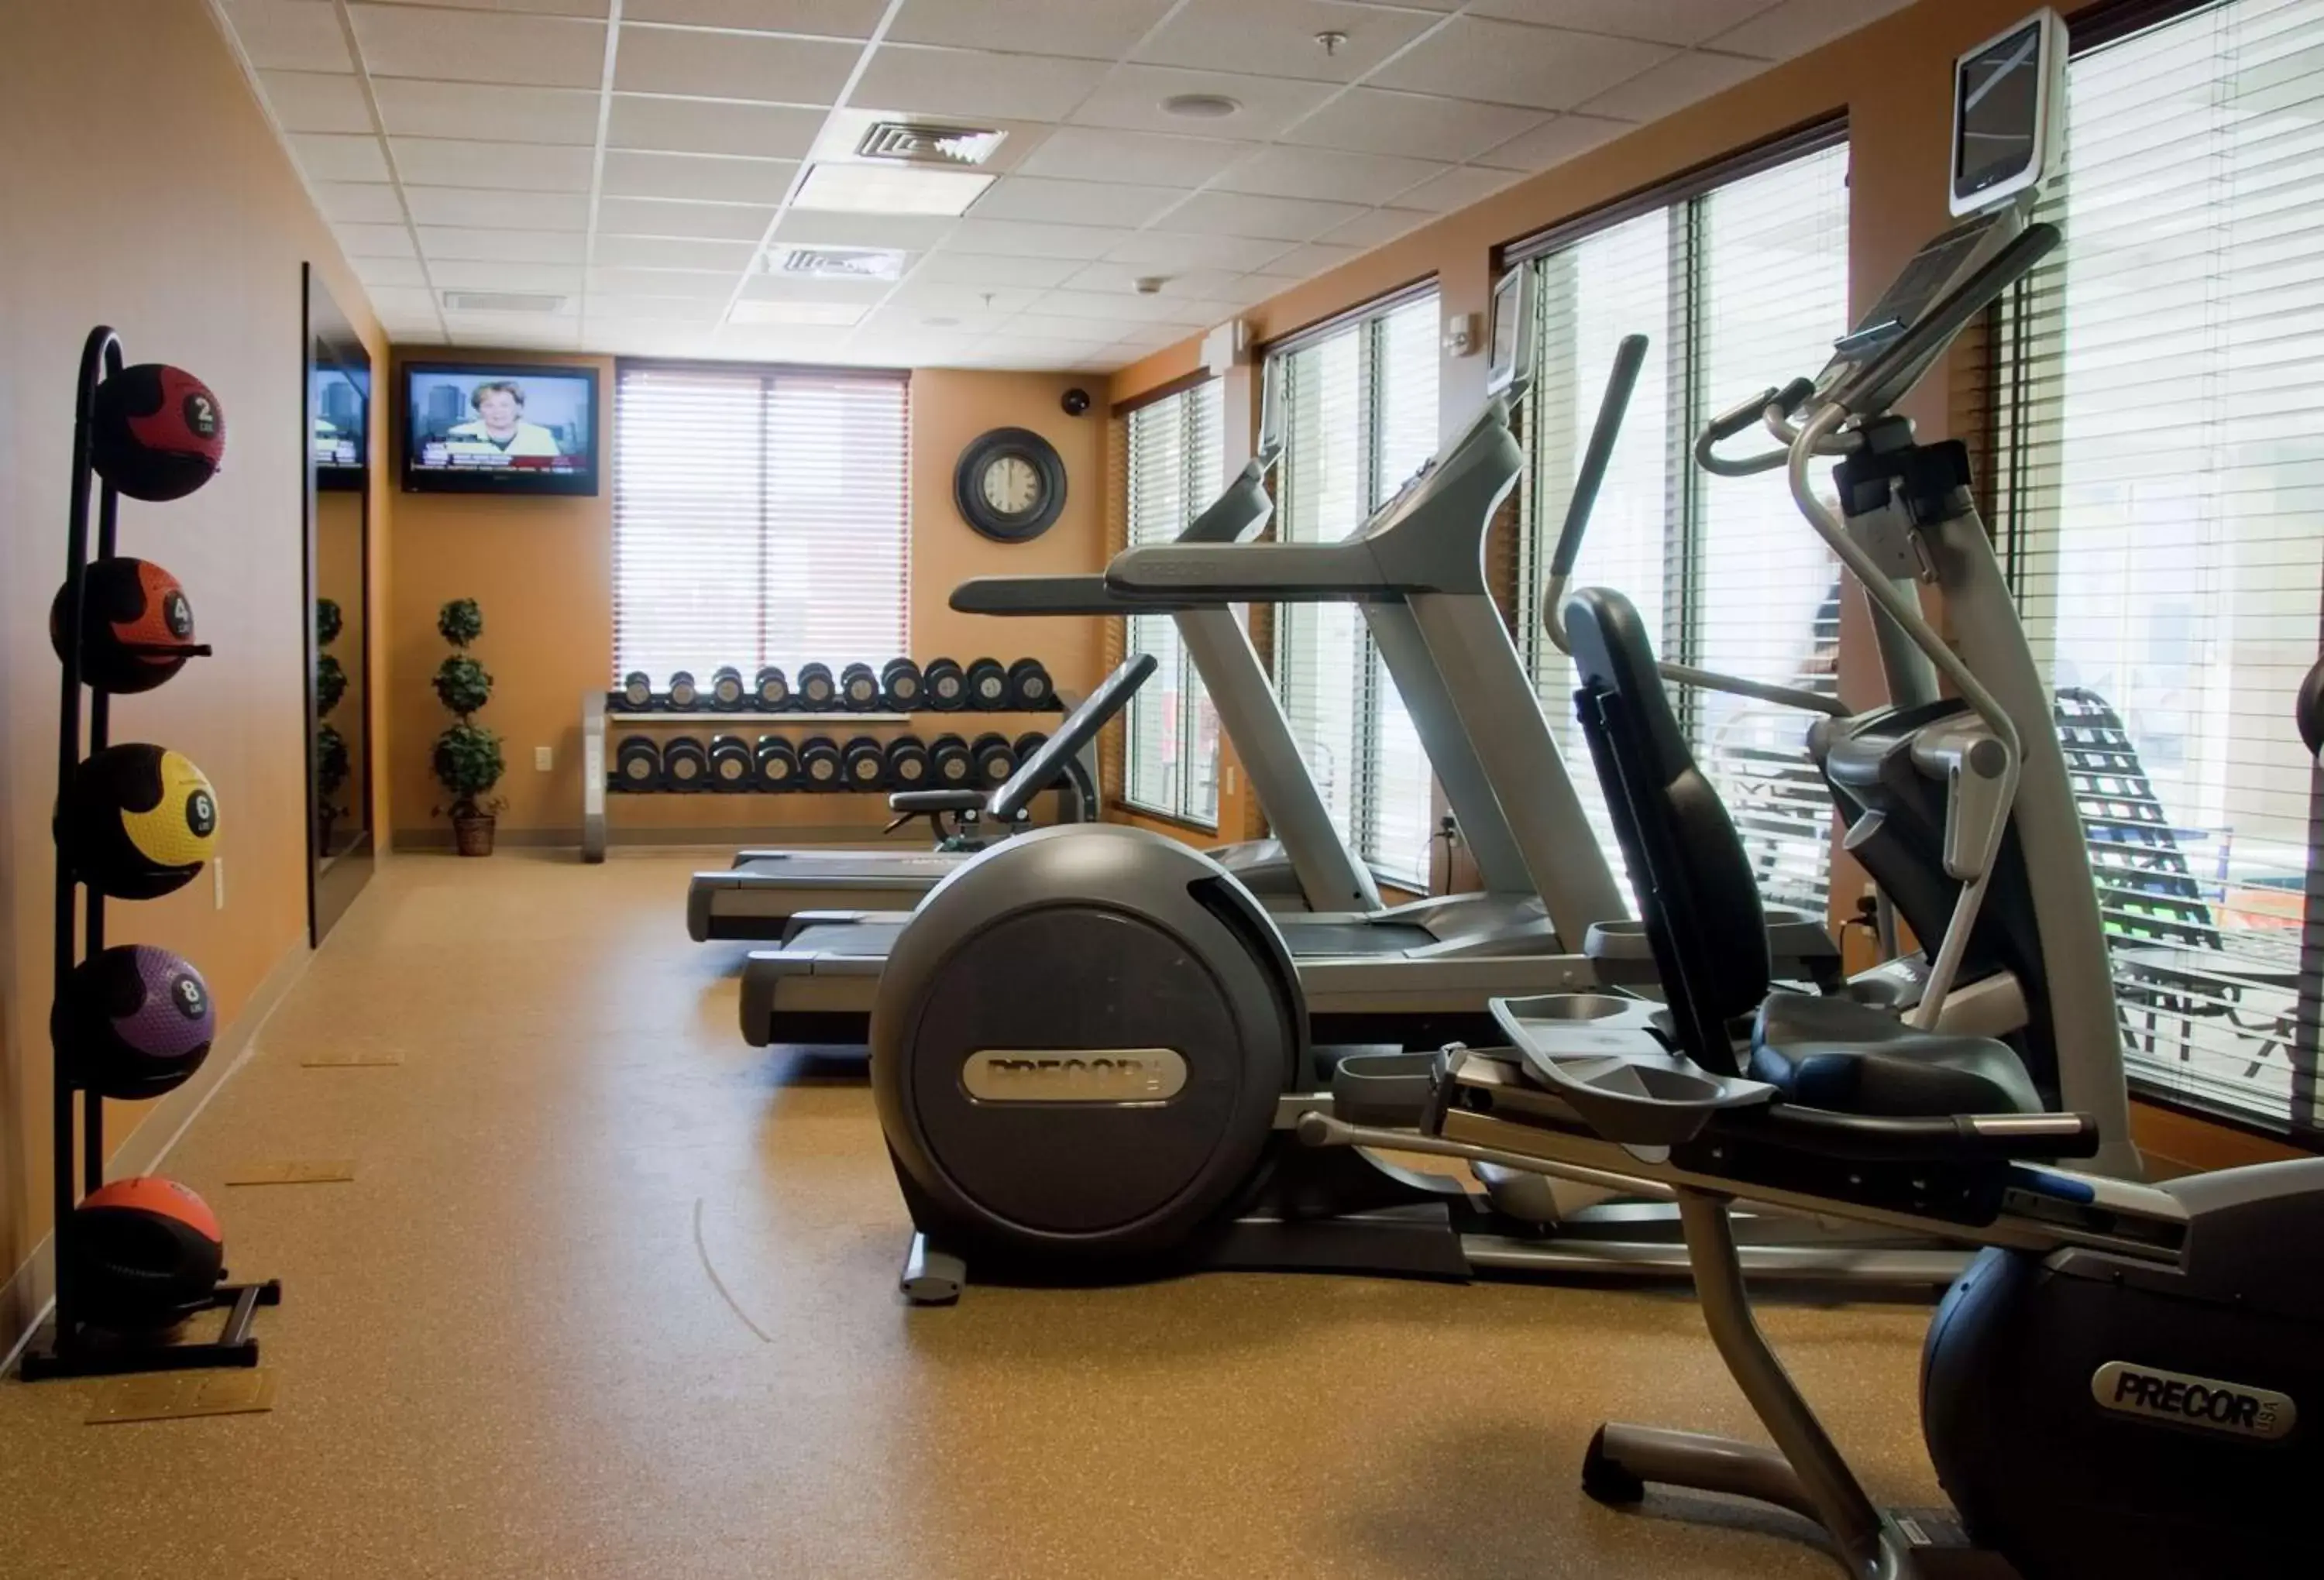 Fitness centre/facilities, Fitness Center/Facilities in Hilton Garden Inn Dulles North